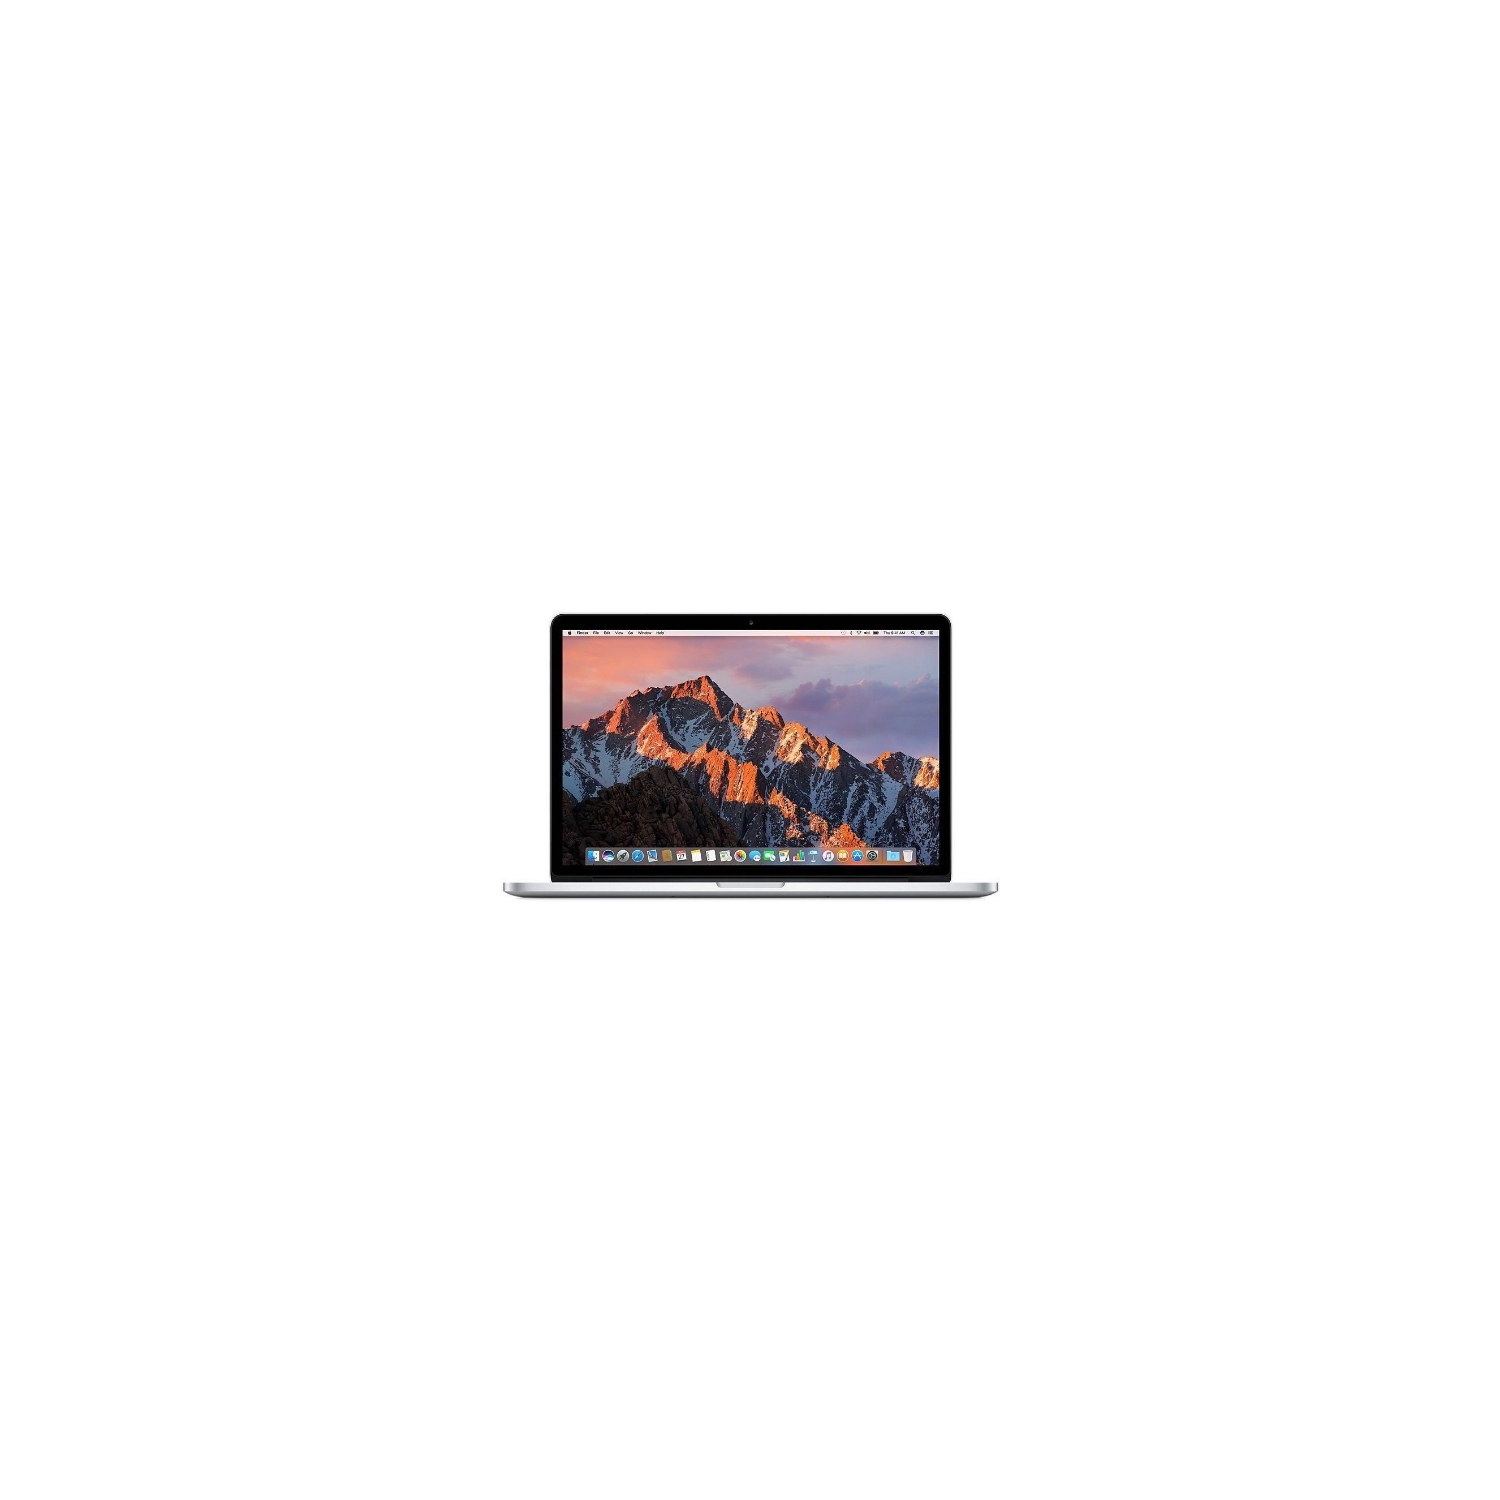 Refurbished (Excellent) - MacBook Pro Retina 15 A1398 i7 16GB /512GB SSD (2014 Model) - Grade A, Excellent Condition, 9/10